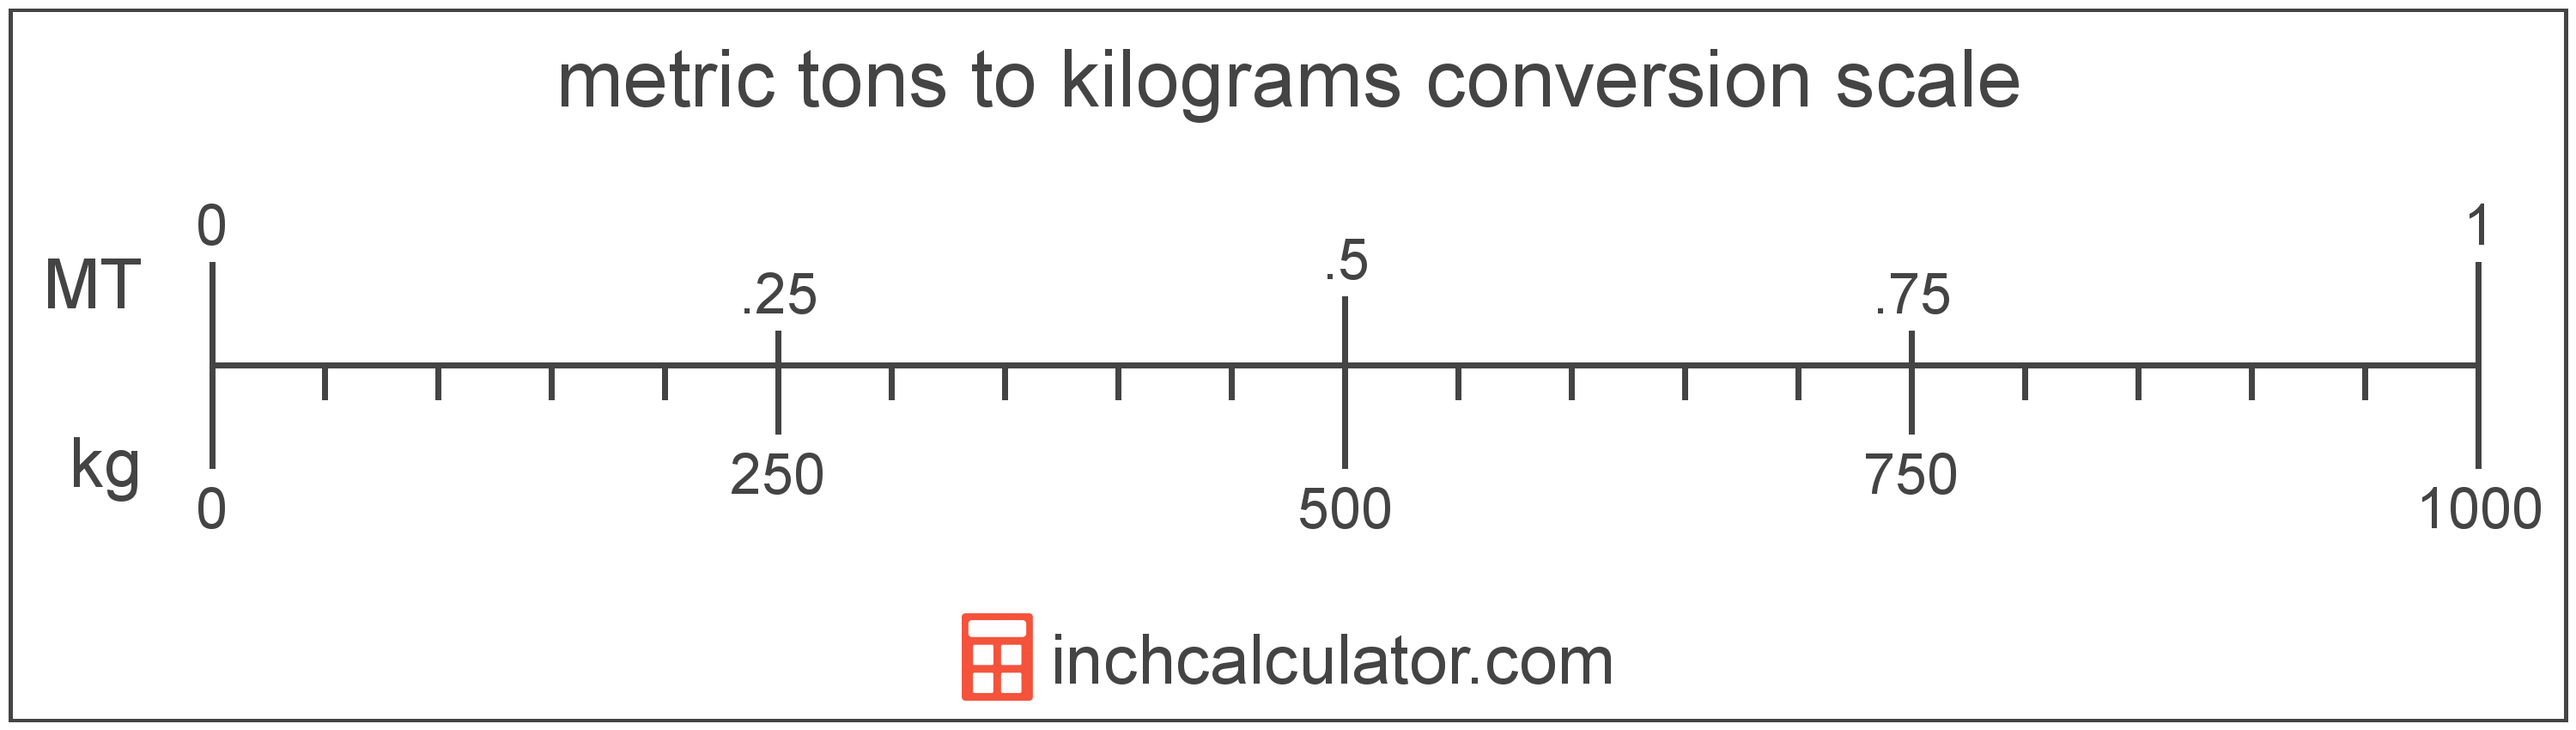 convert-metric-tons-tonnes-to-kilograms-t-to-kg